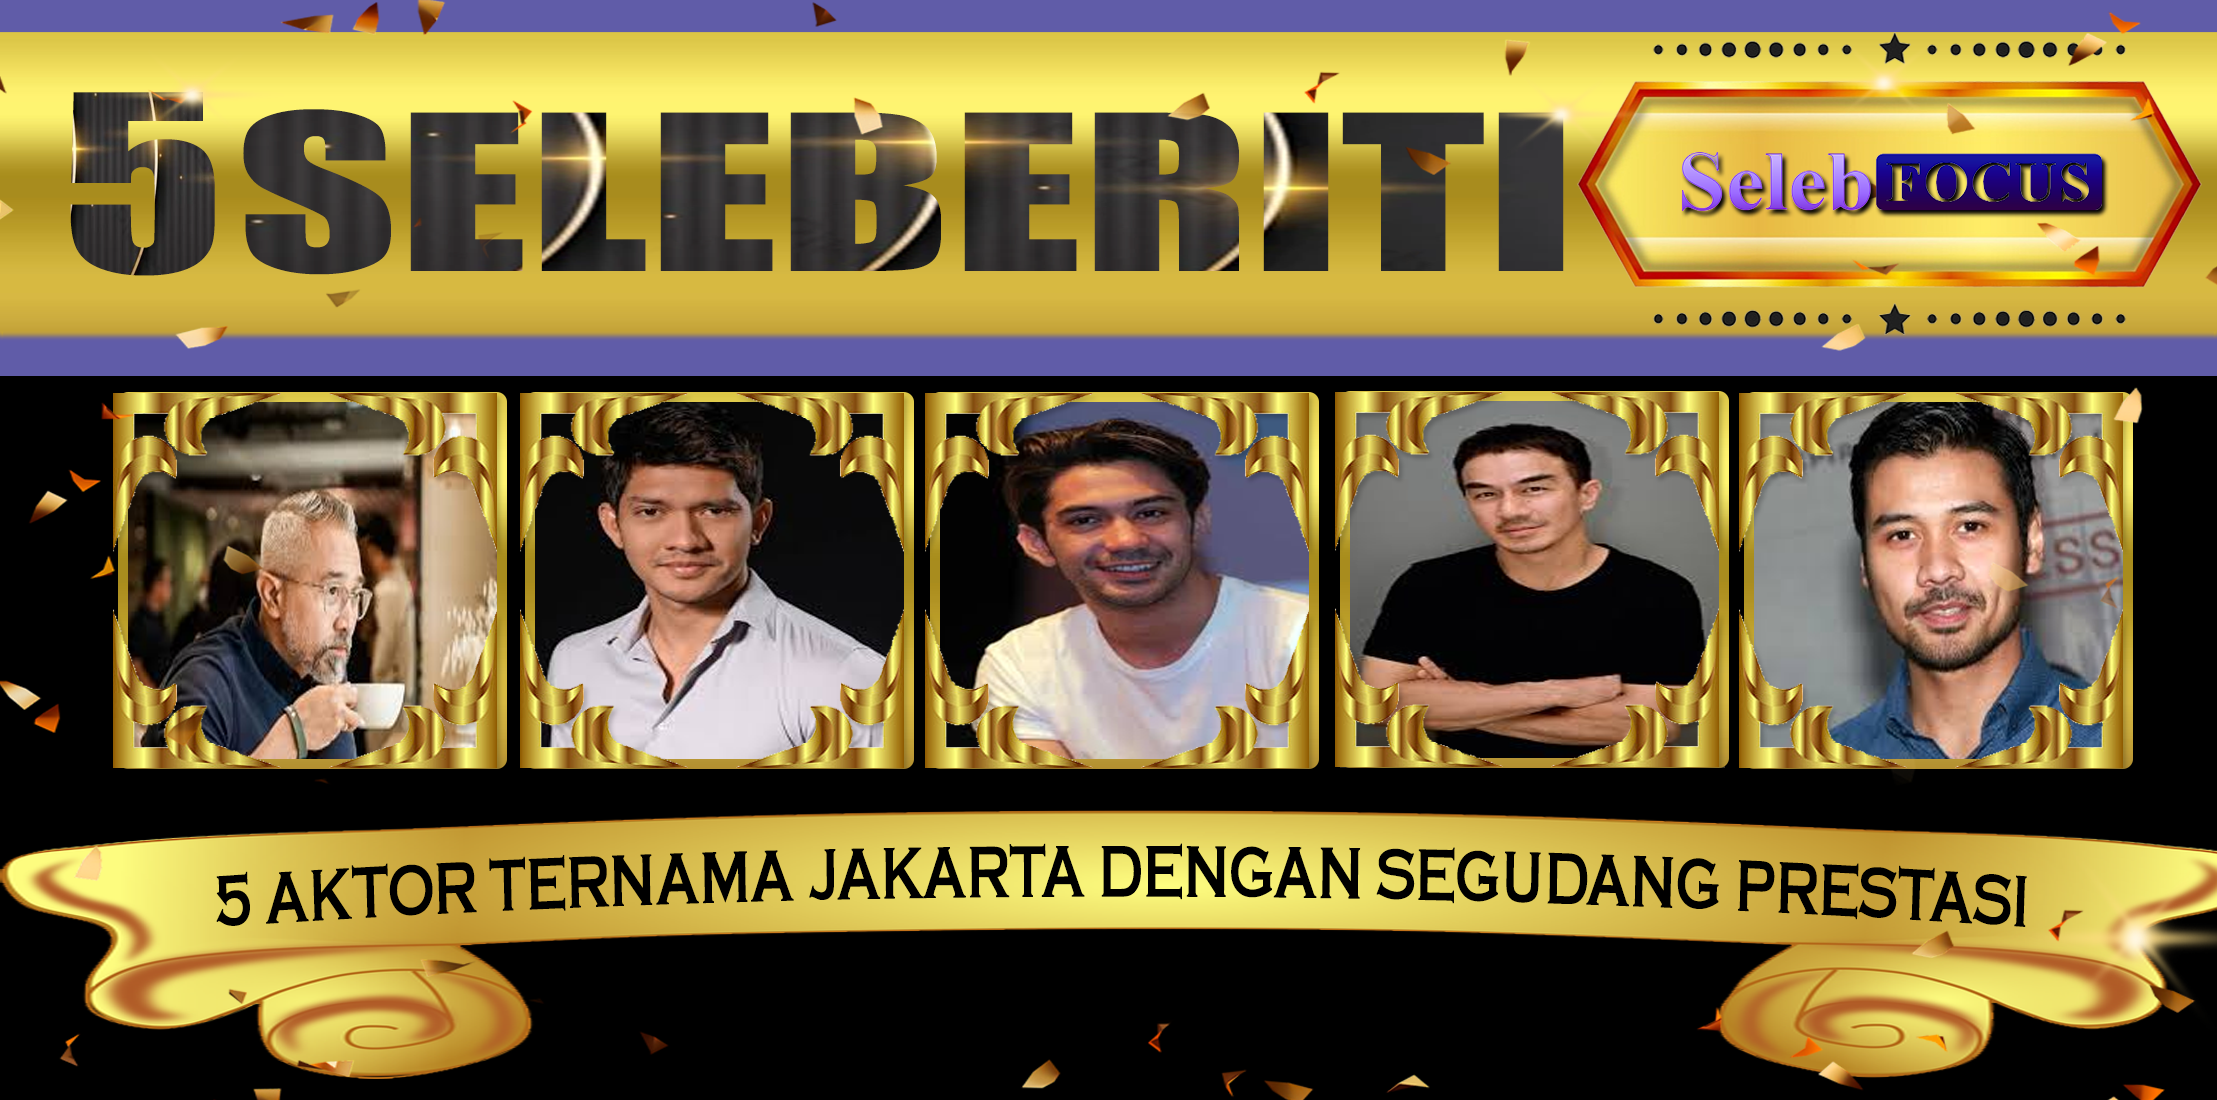 5 Aktor Ternama Jakarta